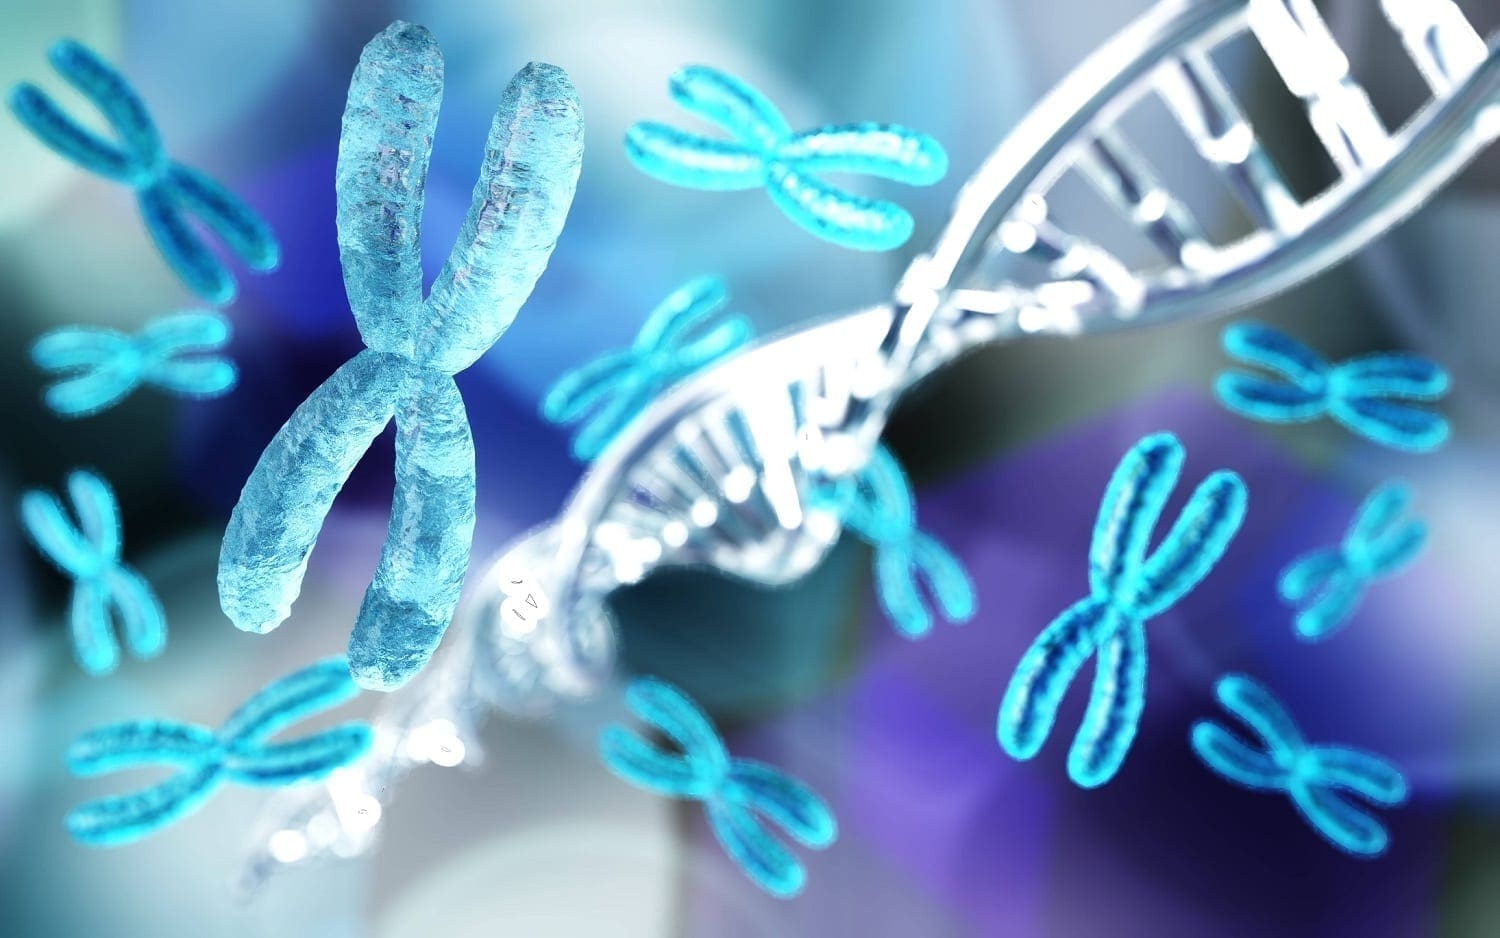 Chromosomes and DNA spirals: ID 141572715 © Stanislav Rykunov | Dreamstime.com